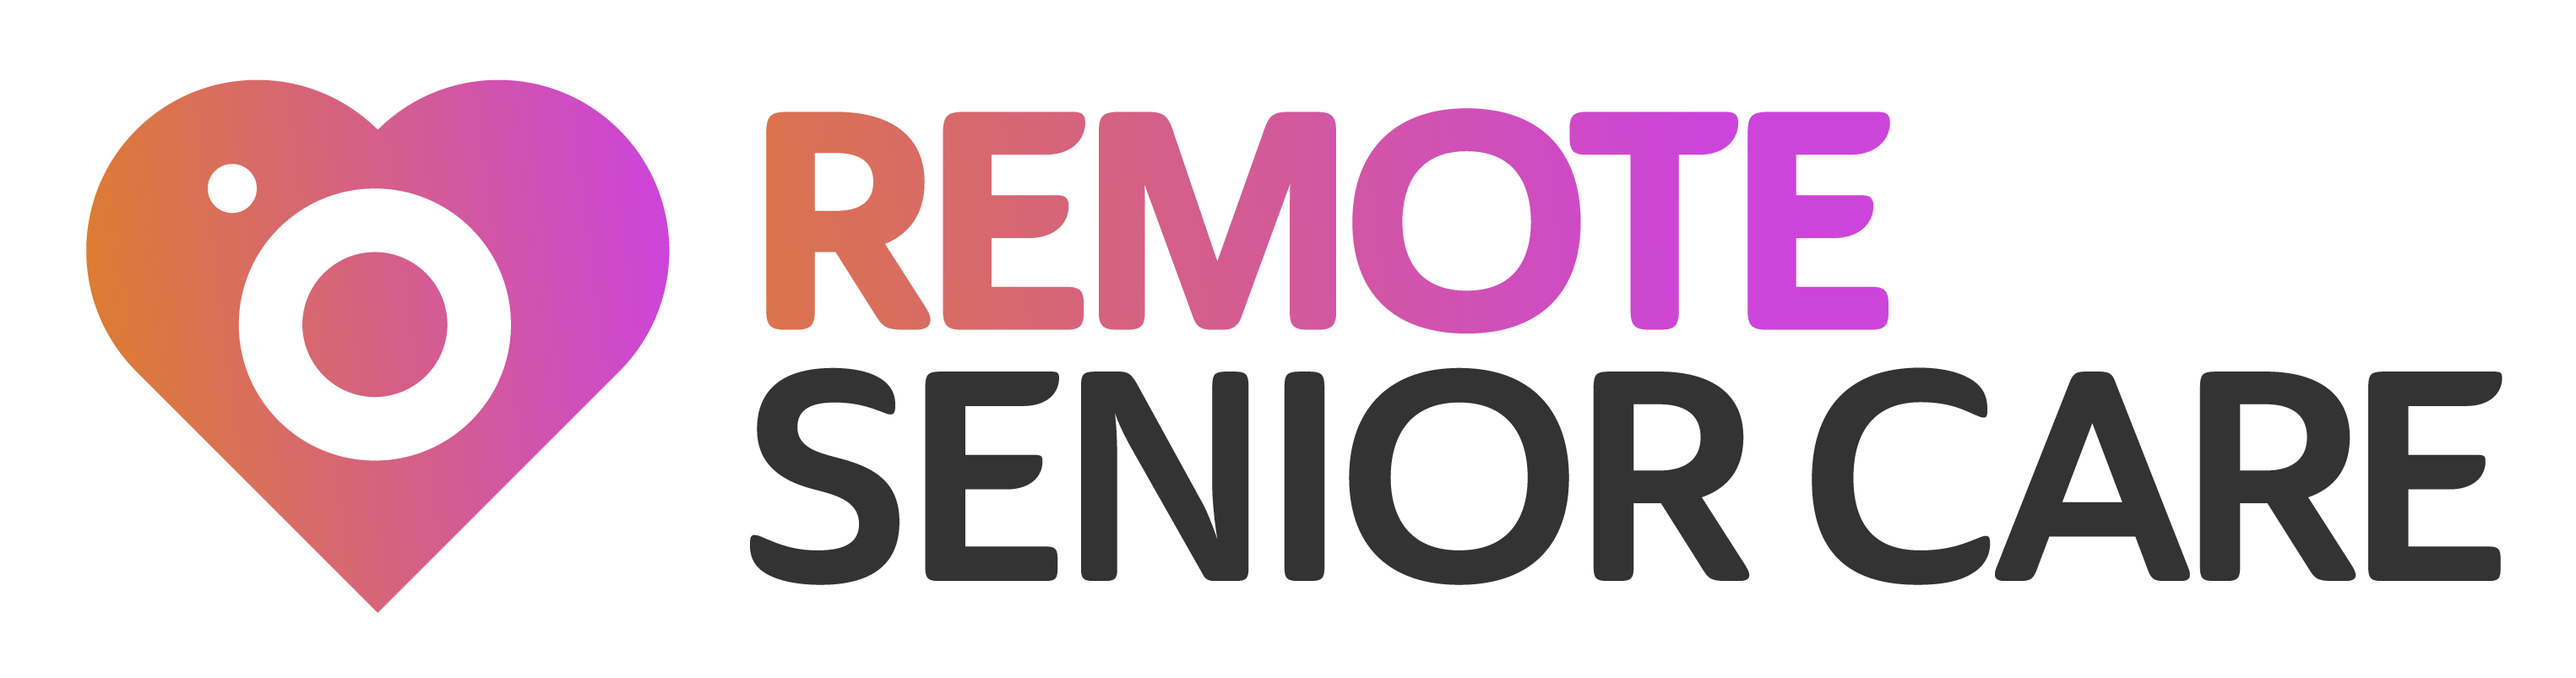 Remote_Senior_Care_FULL_Logo_DARK_5xaybn2.png